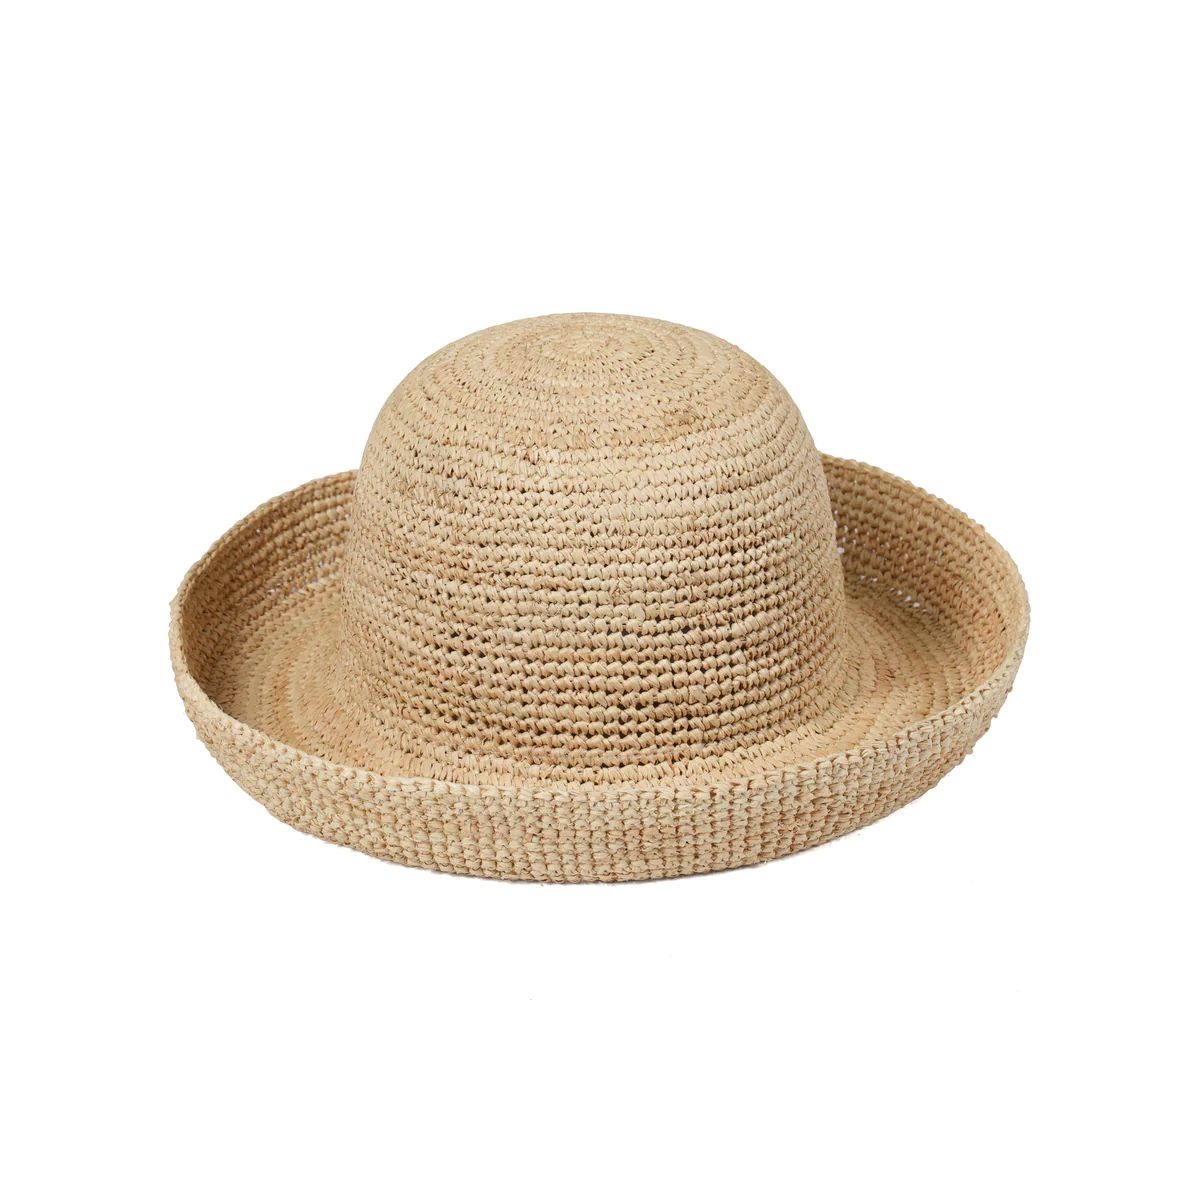 Raffia Cruiser - Straw Boater Hat in Natural | Lack of Color US | Lack of Color